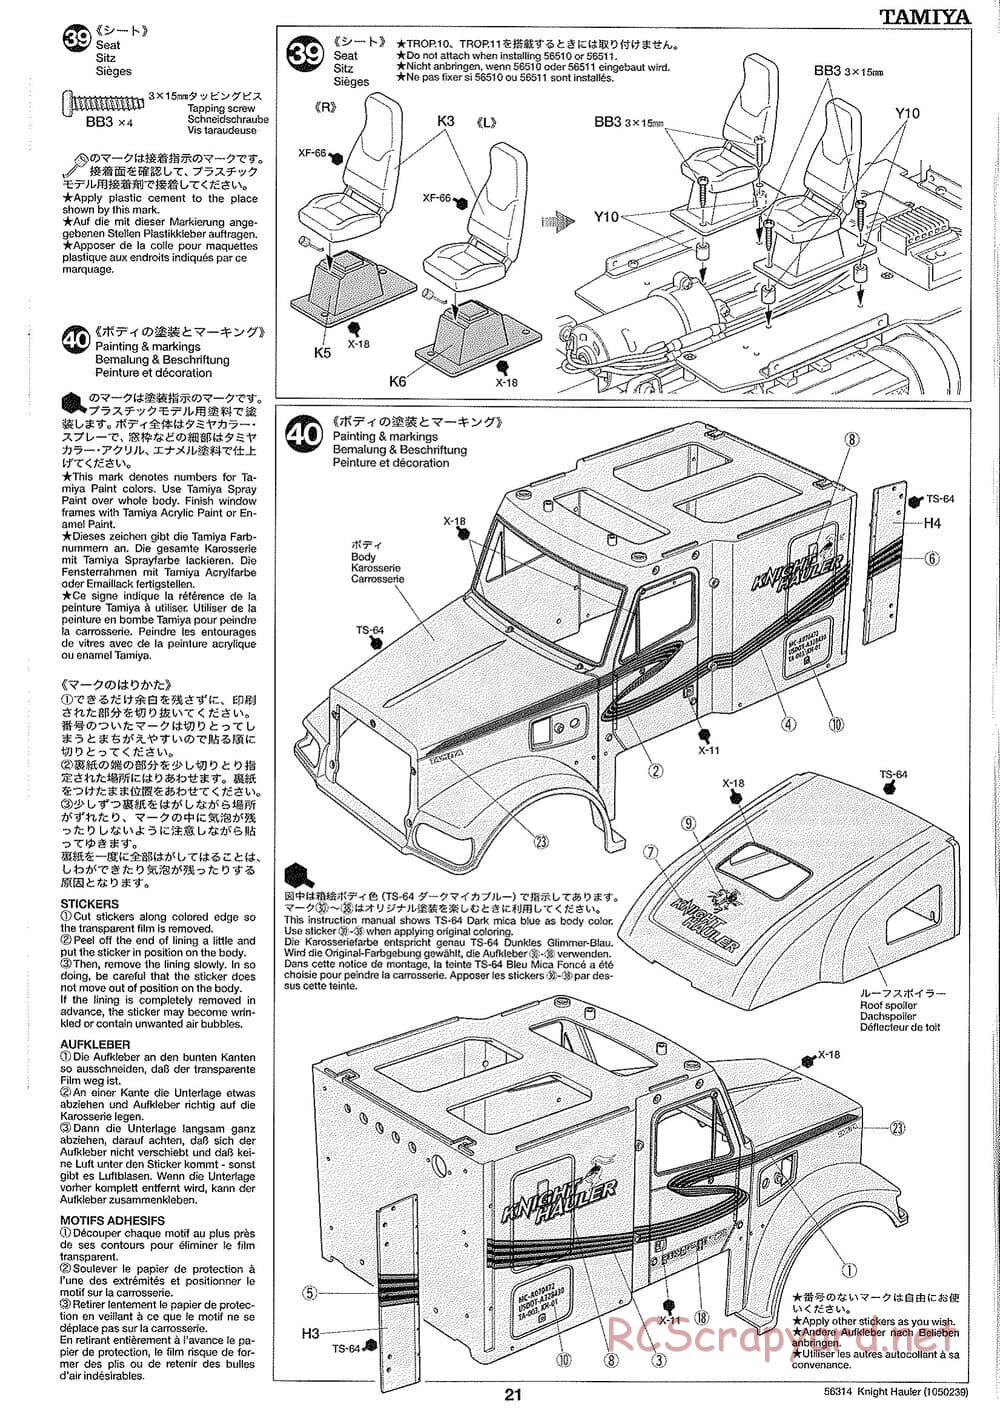 Tamiya - Knight Hauler Tractor Truck Chassis - Manual - Page 21